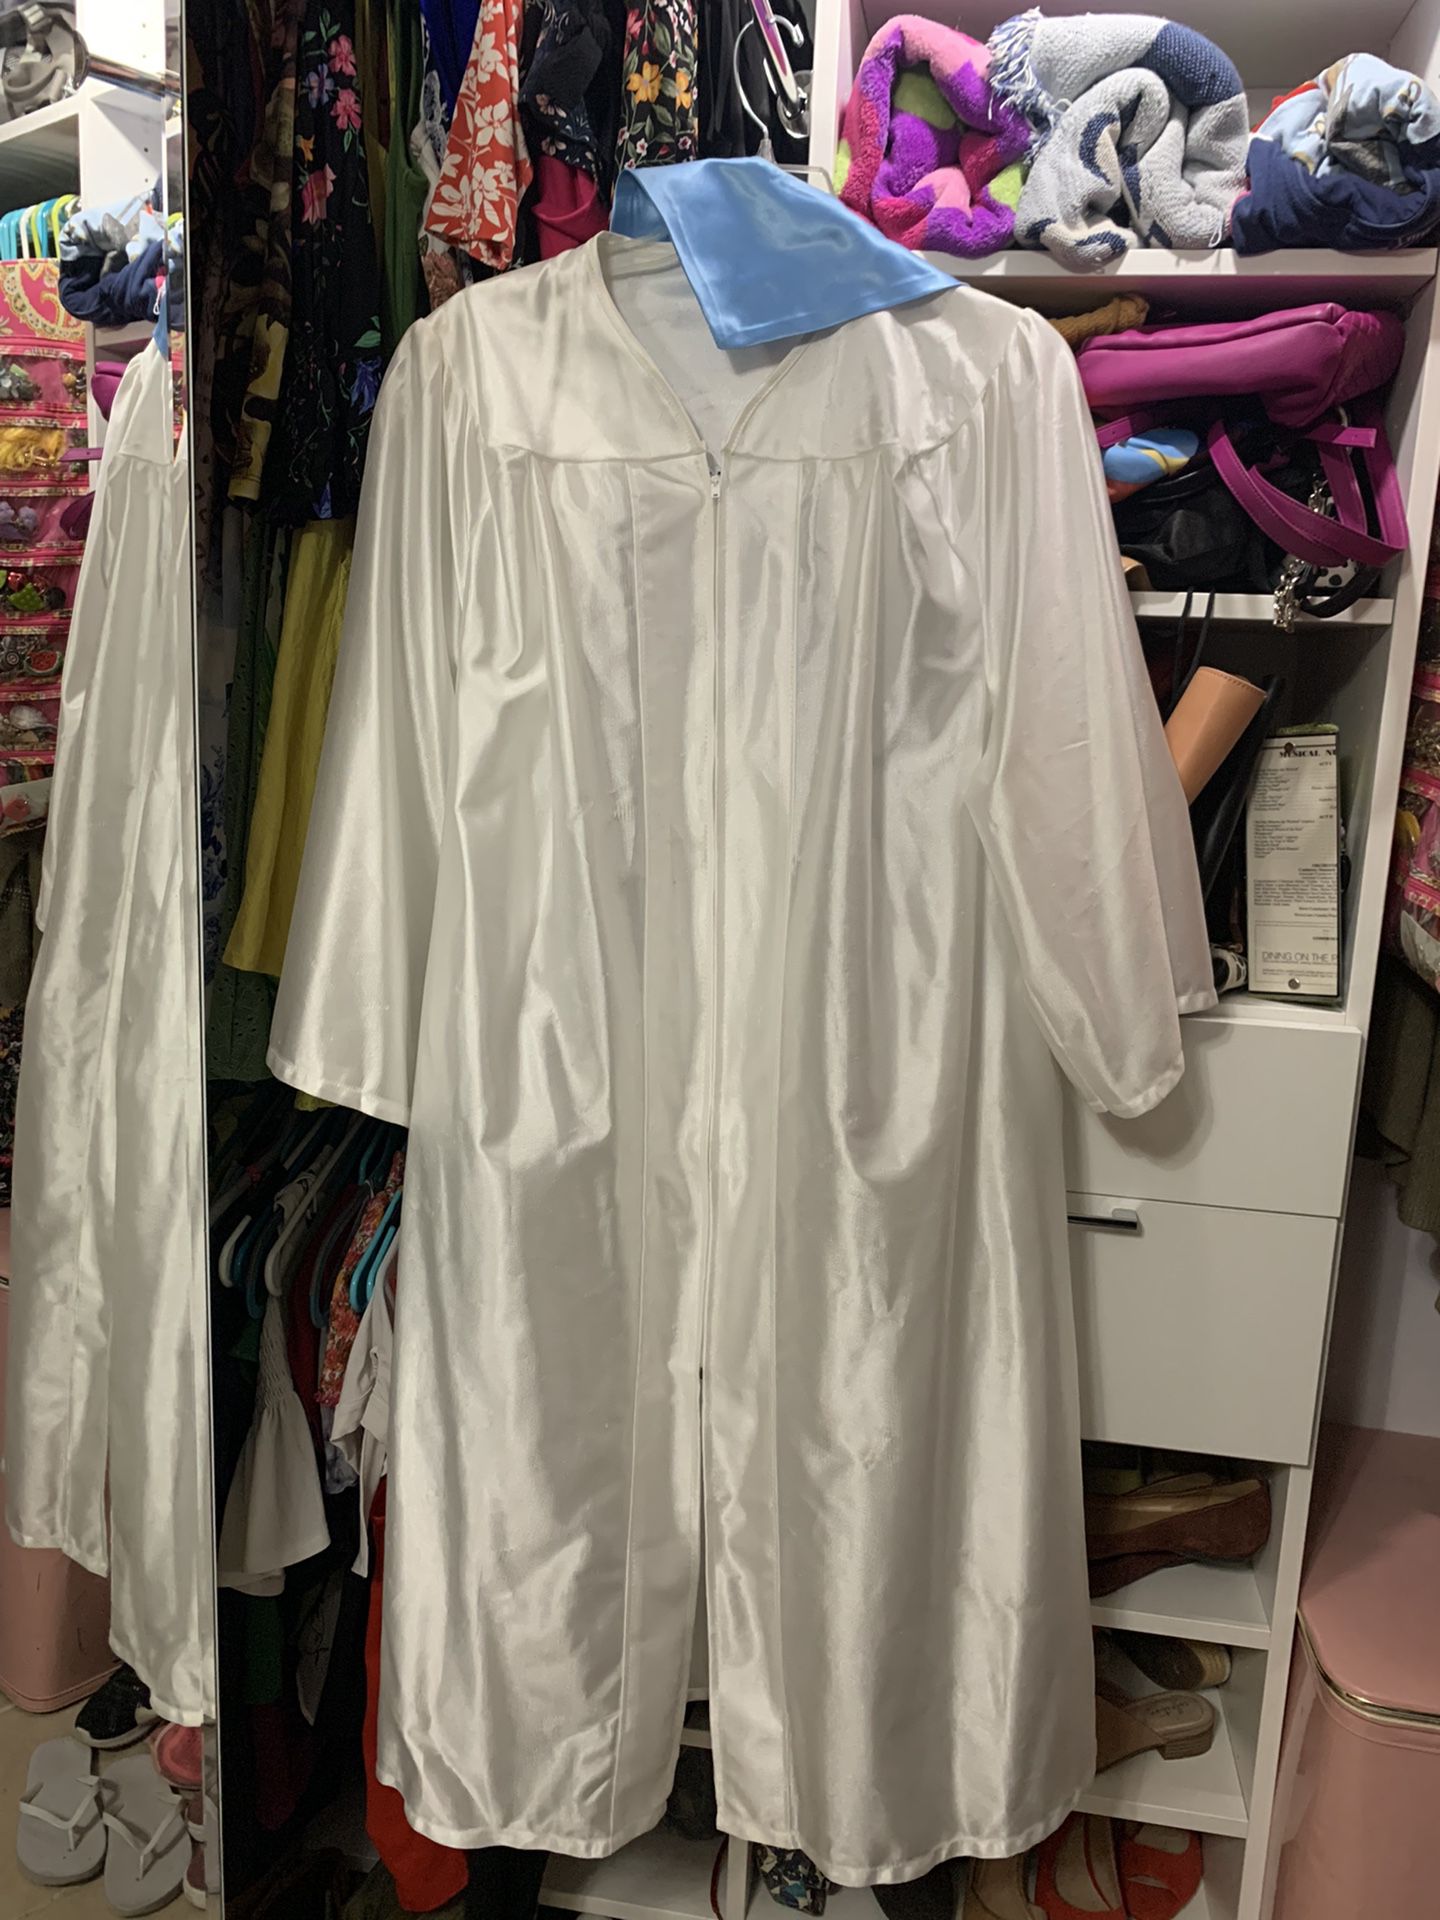 White Graduation Gown 